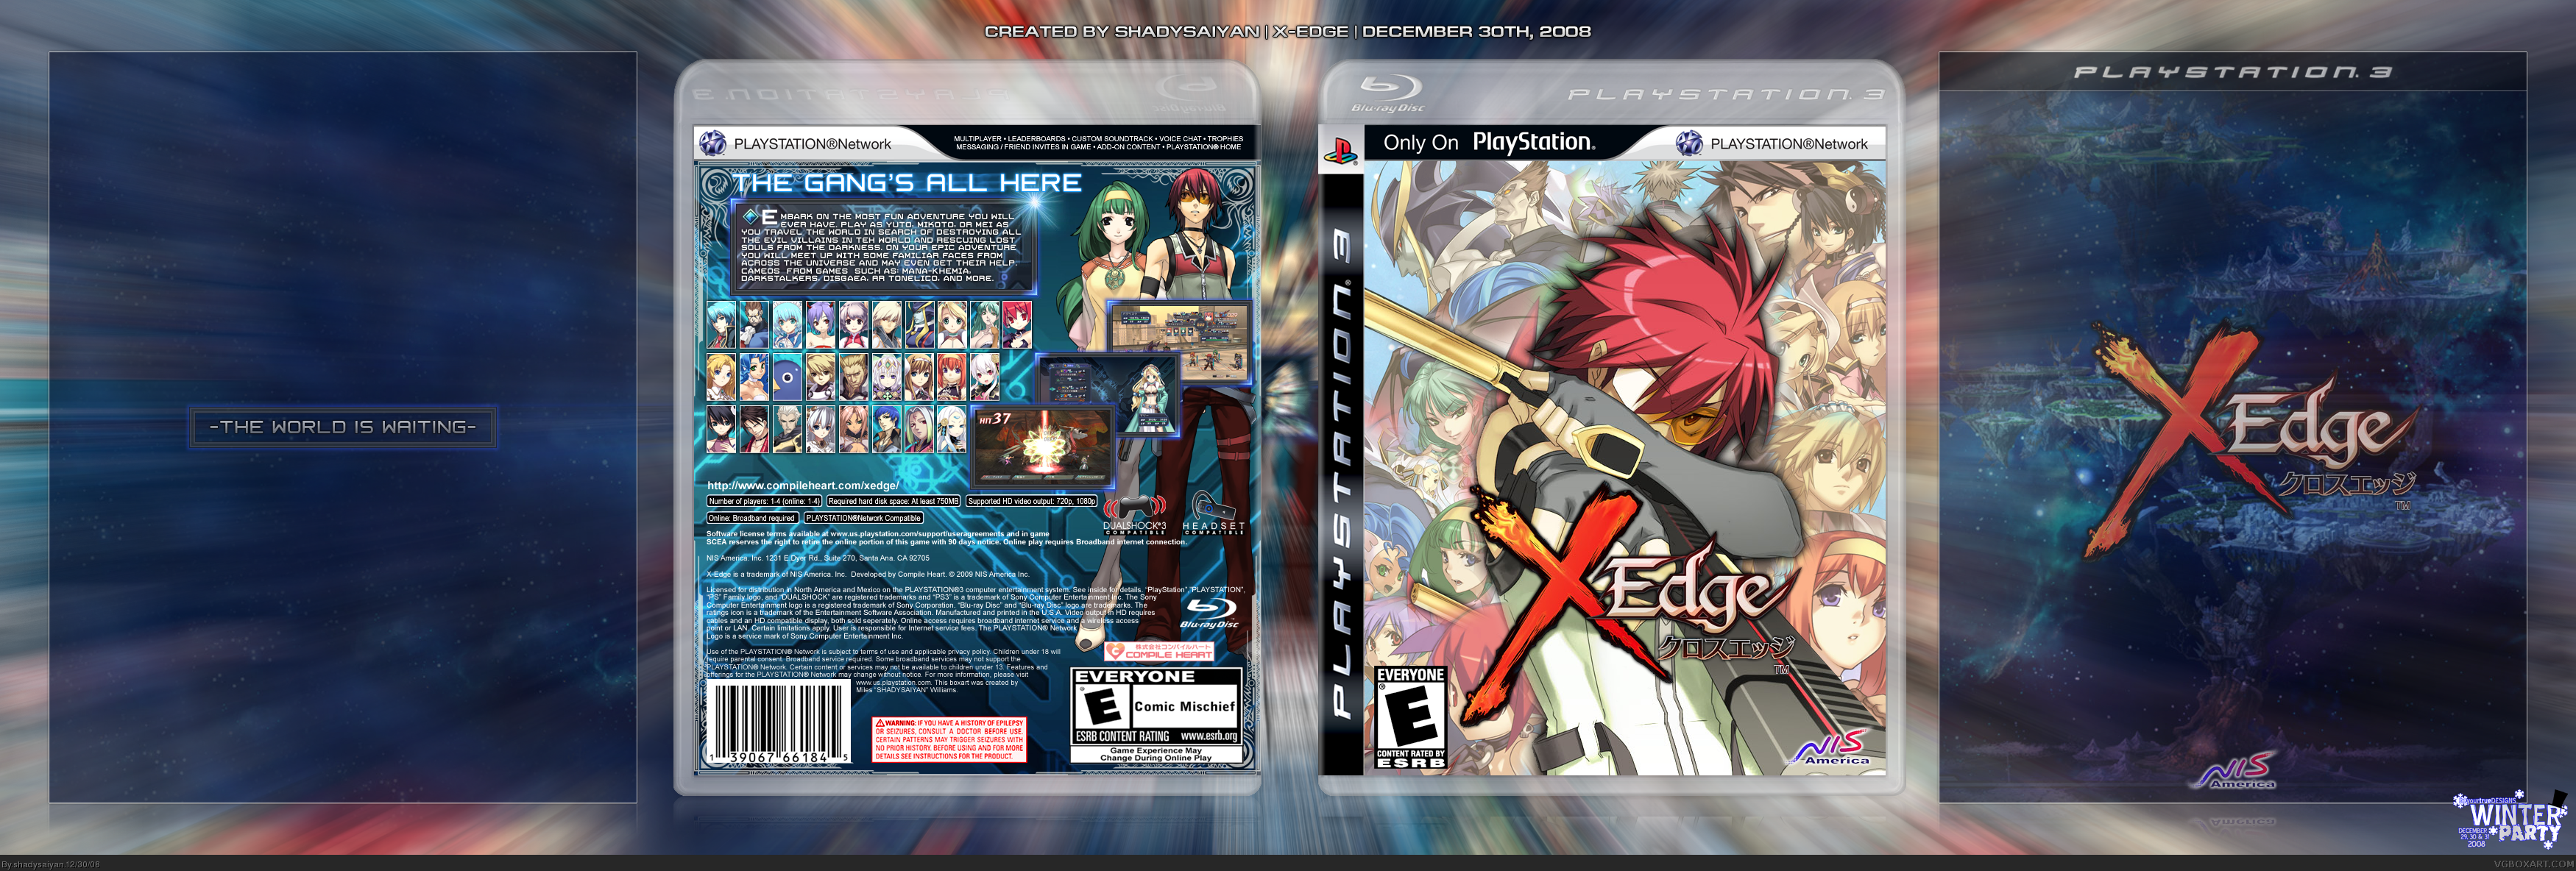 X-Edge box cover